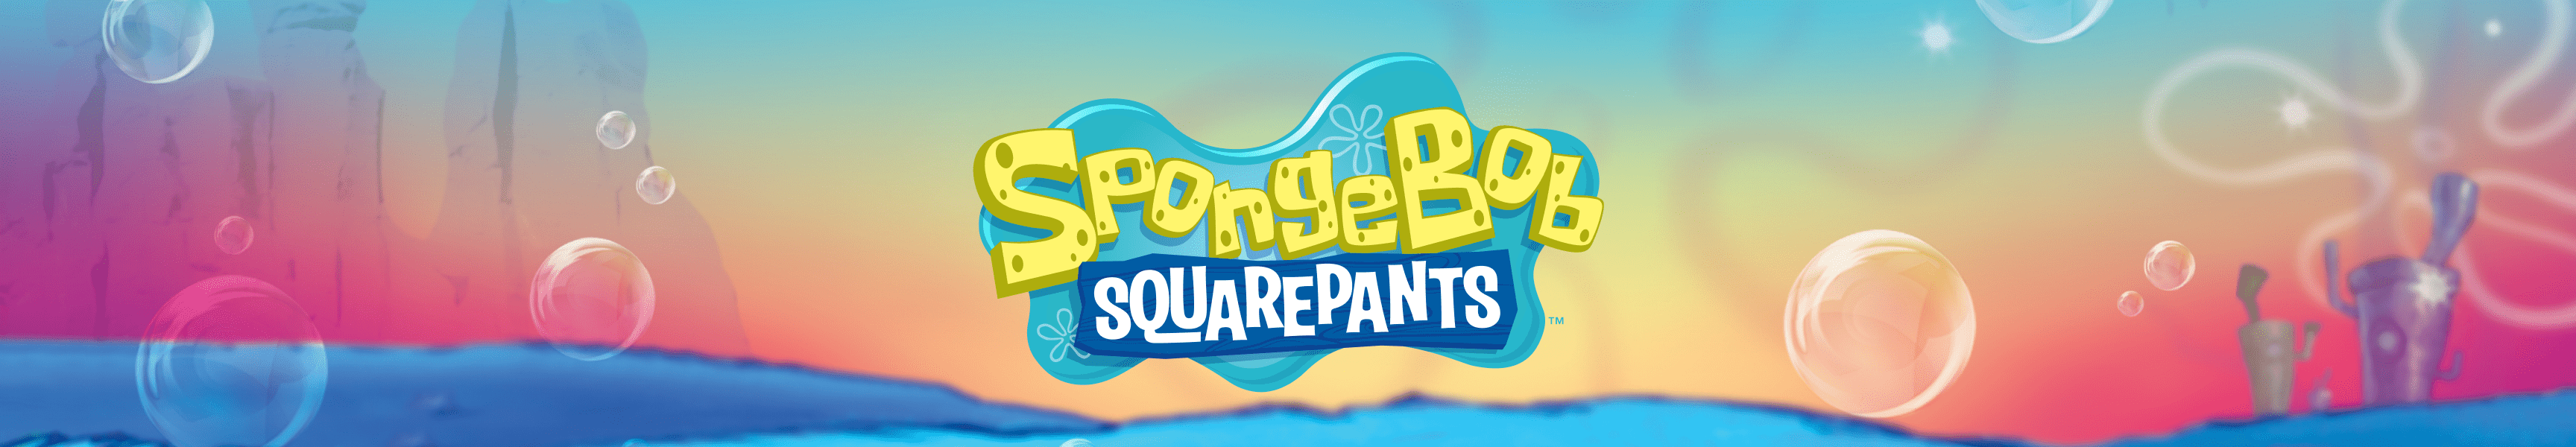 SpongeBob SquarePants Calendars